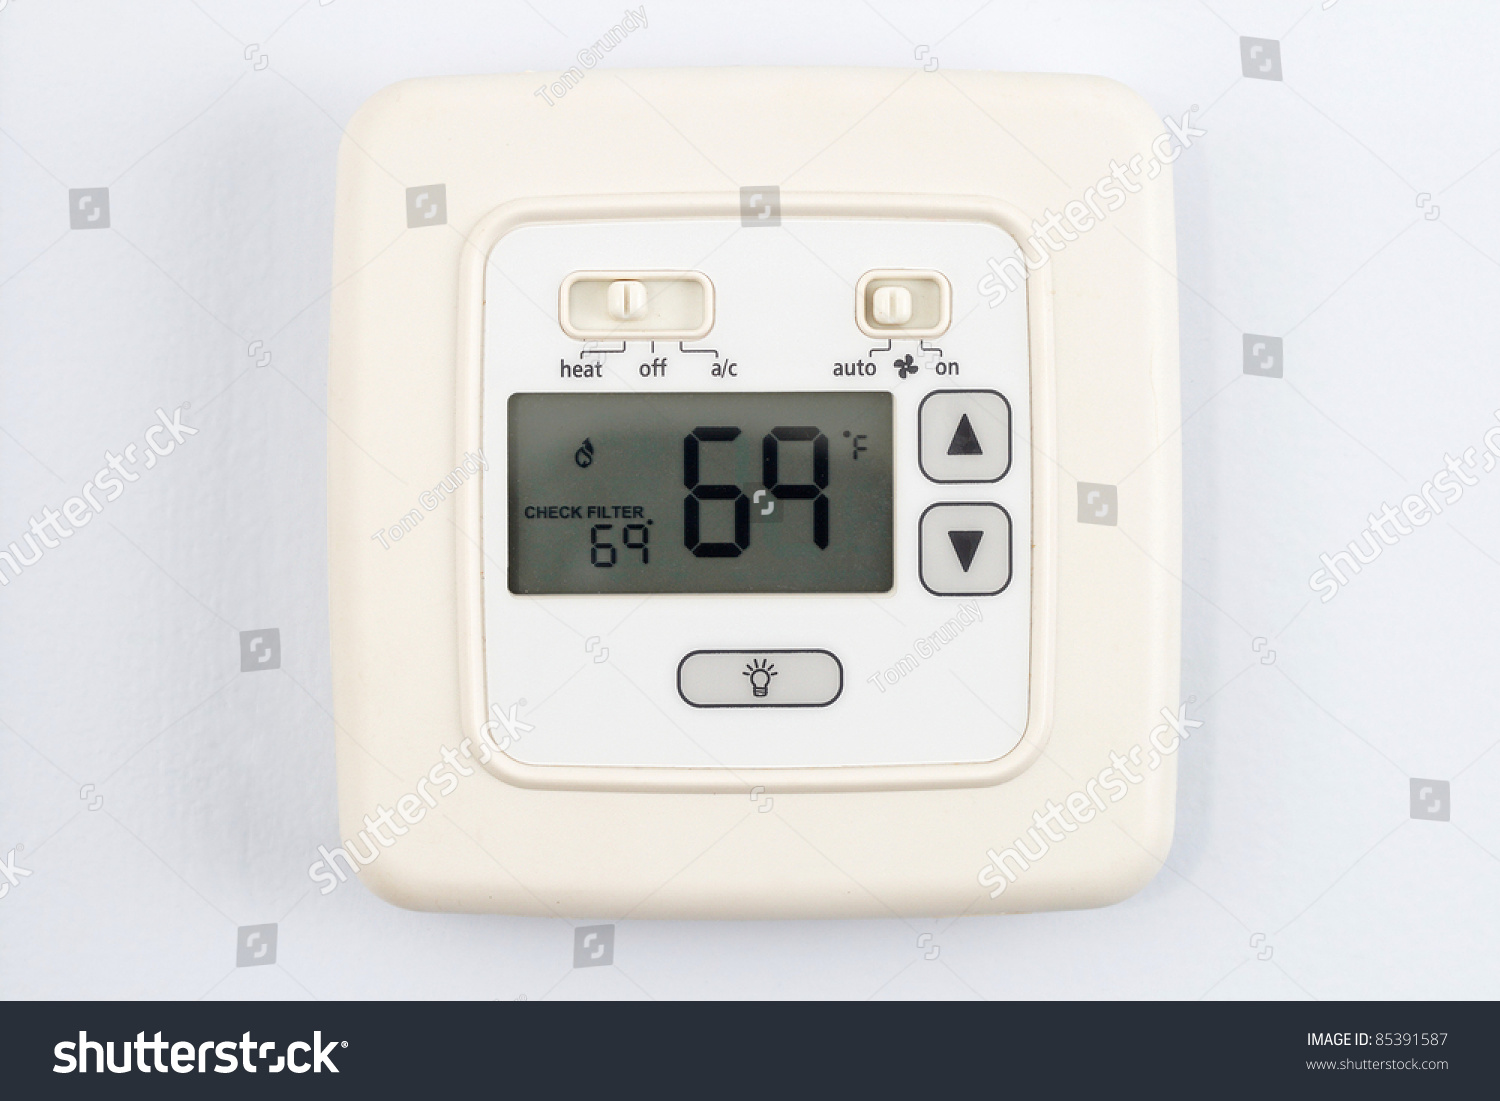 Digital Thermostat On Light Blue Wall Stock Photo 85391587 - Shutterstock1500 x 1101